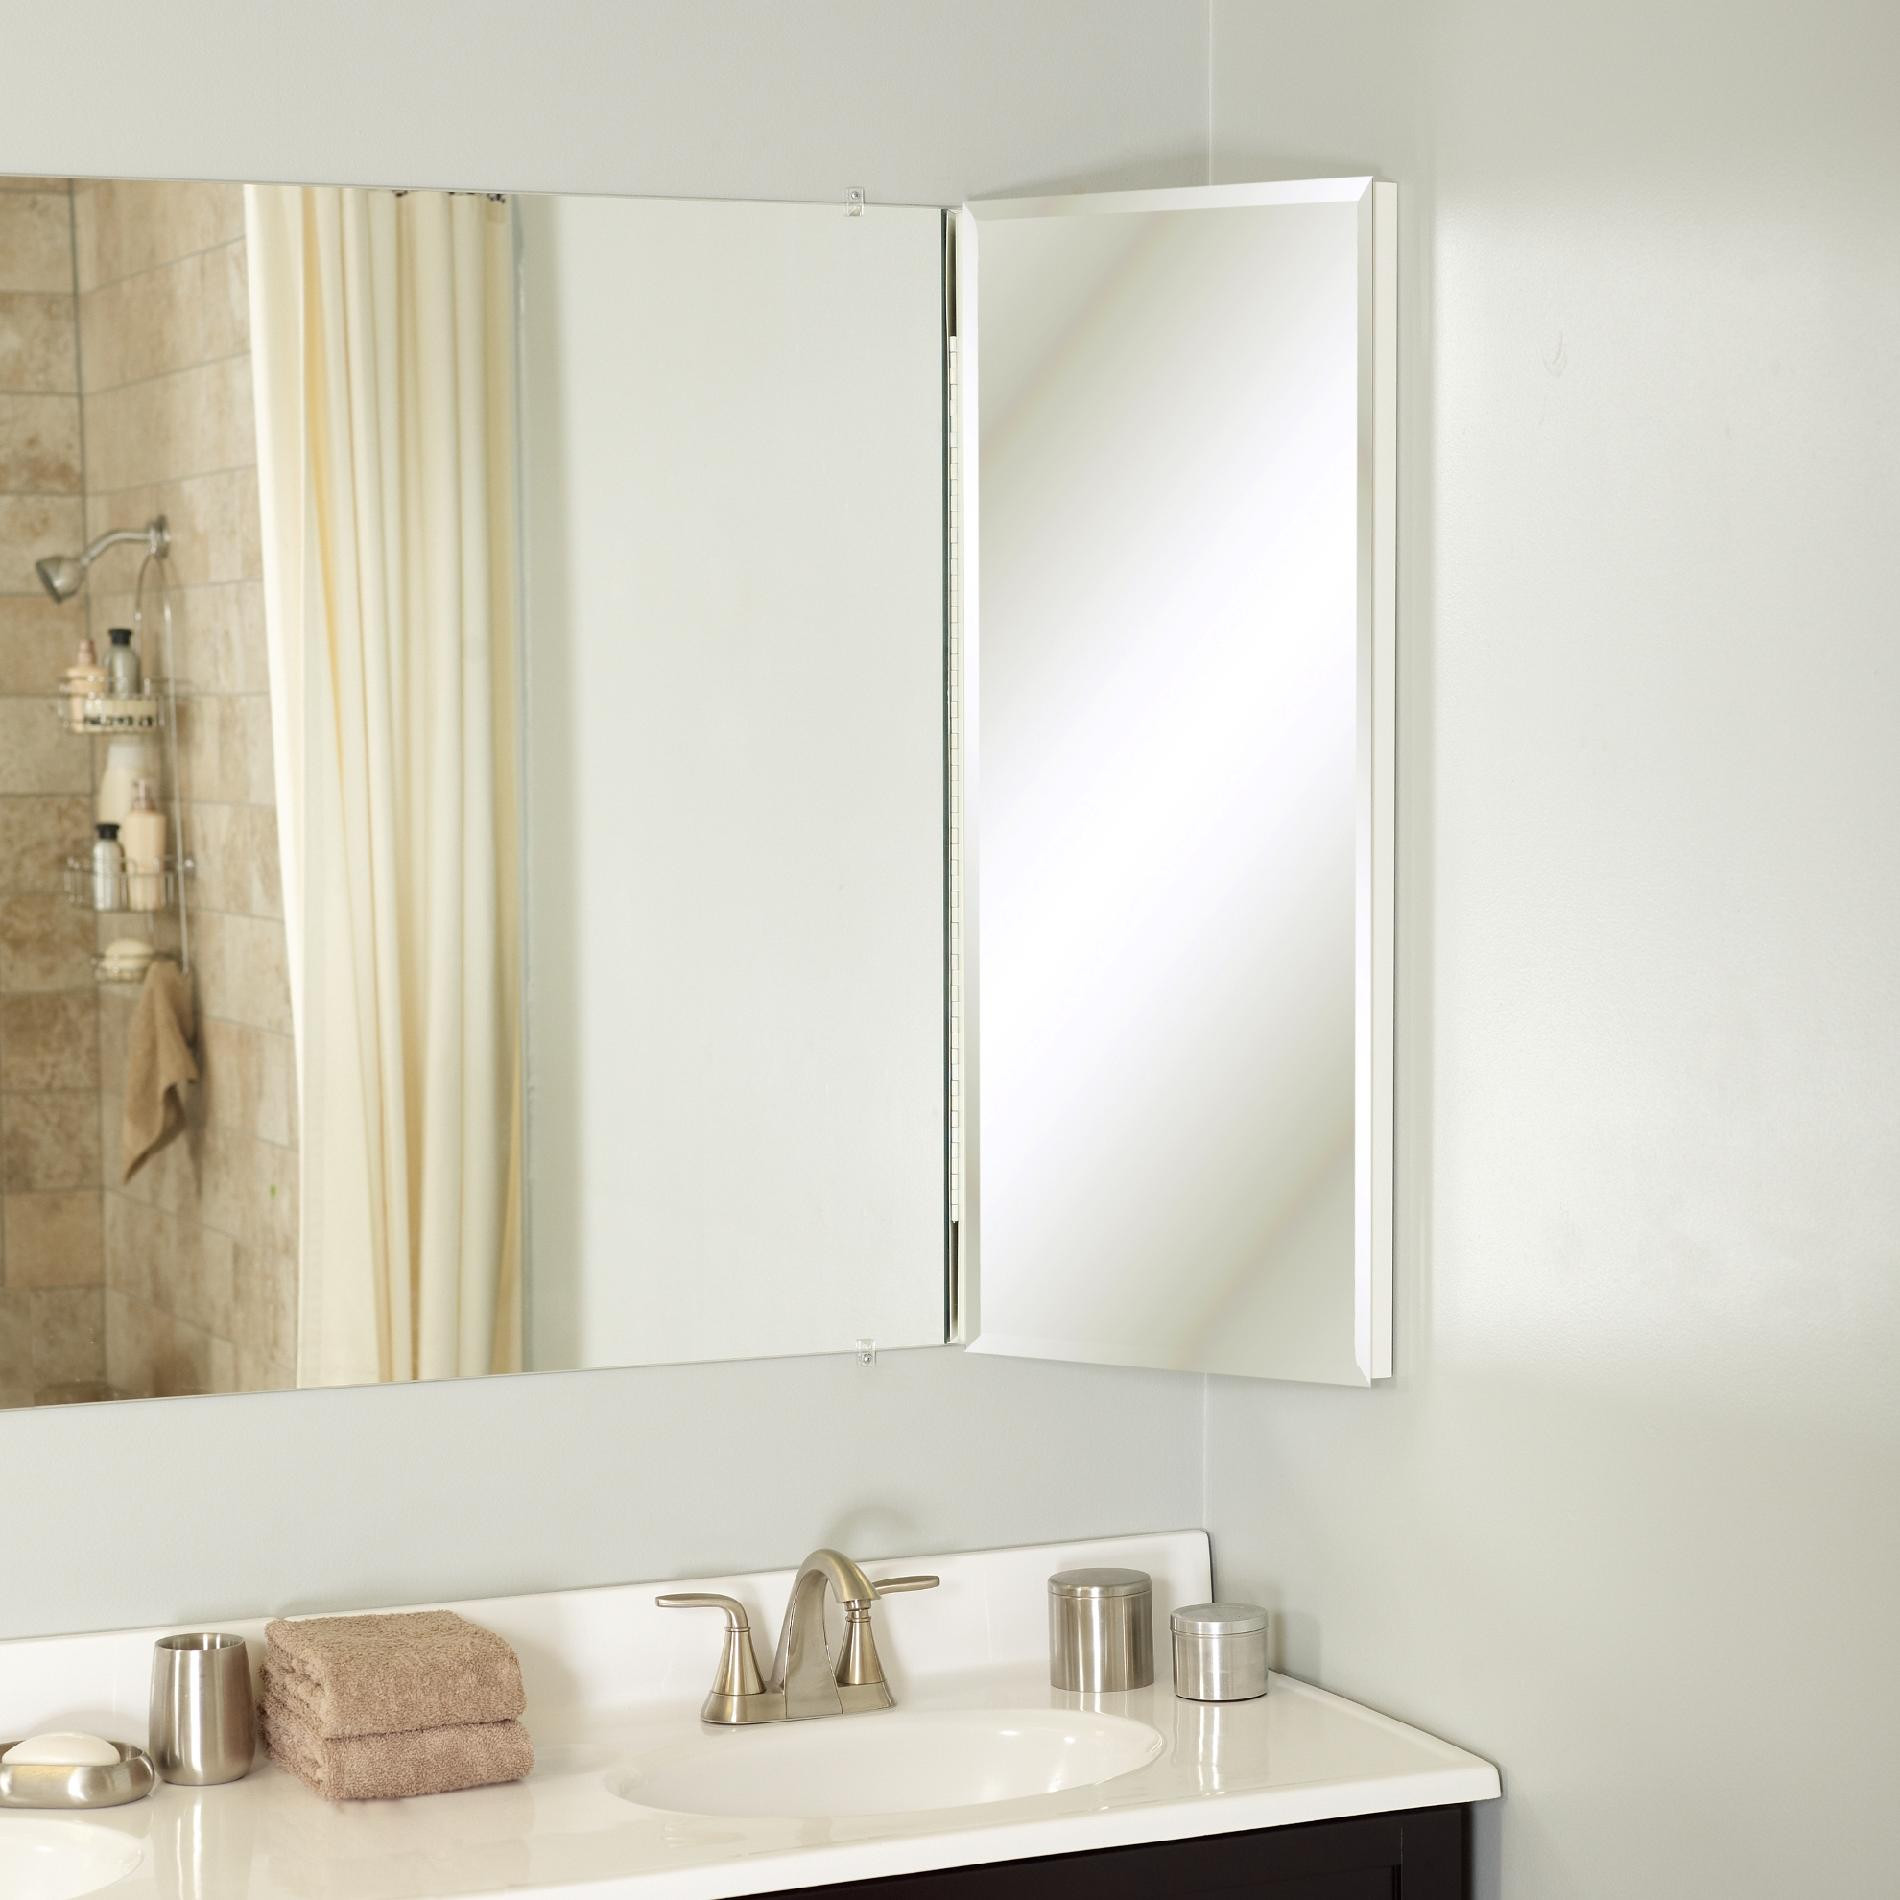 Mirror Cabinet Bathroom
 Zenith Products Over the Mirror Corner Cabinet 14" x 36